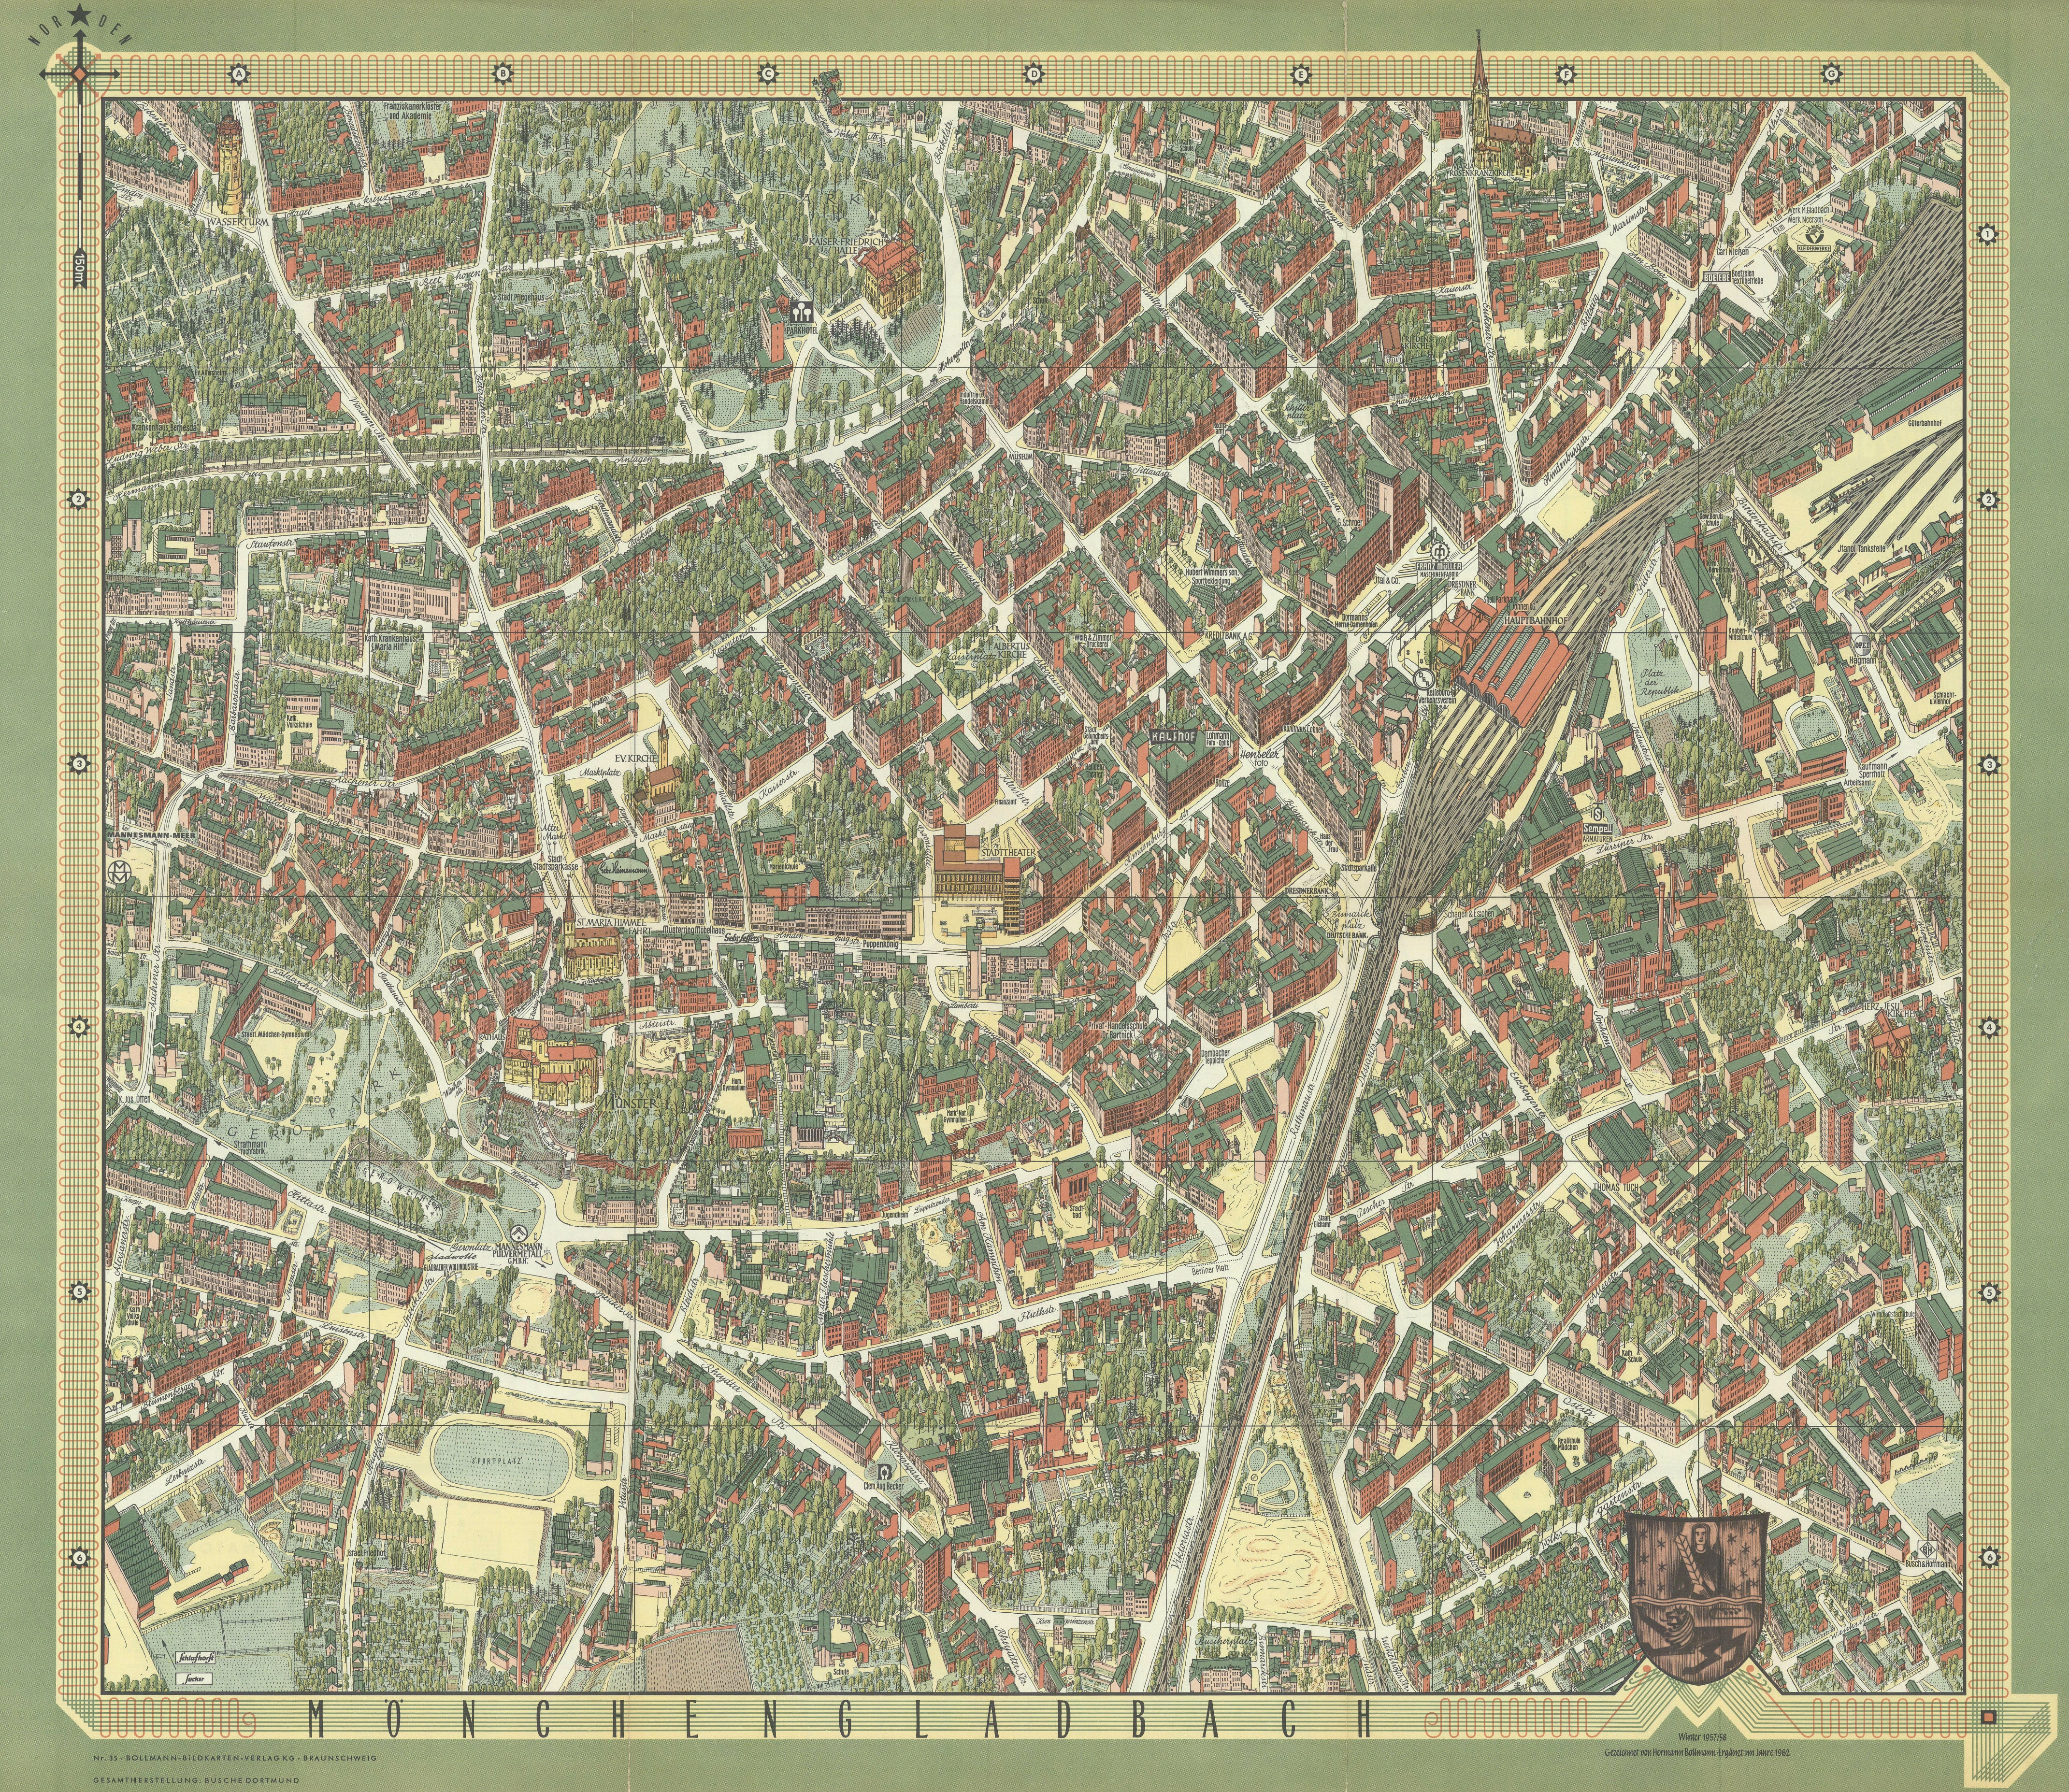 Associate Product Mönchengladbach pictorial bird's eye view city plan by Hermann Bollmann 1962 map